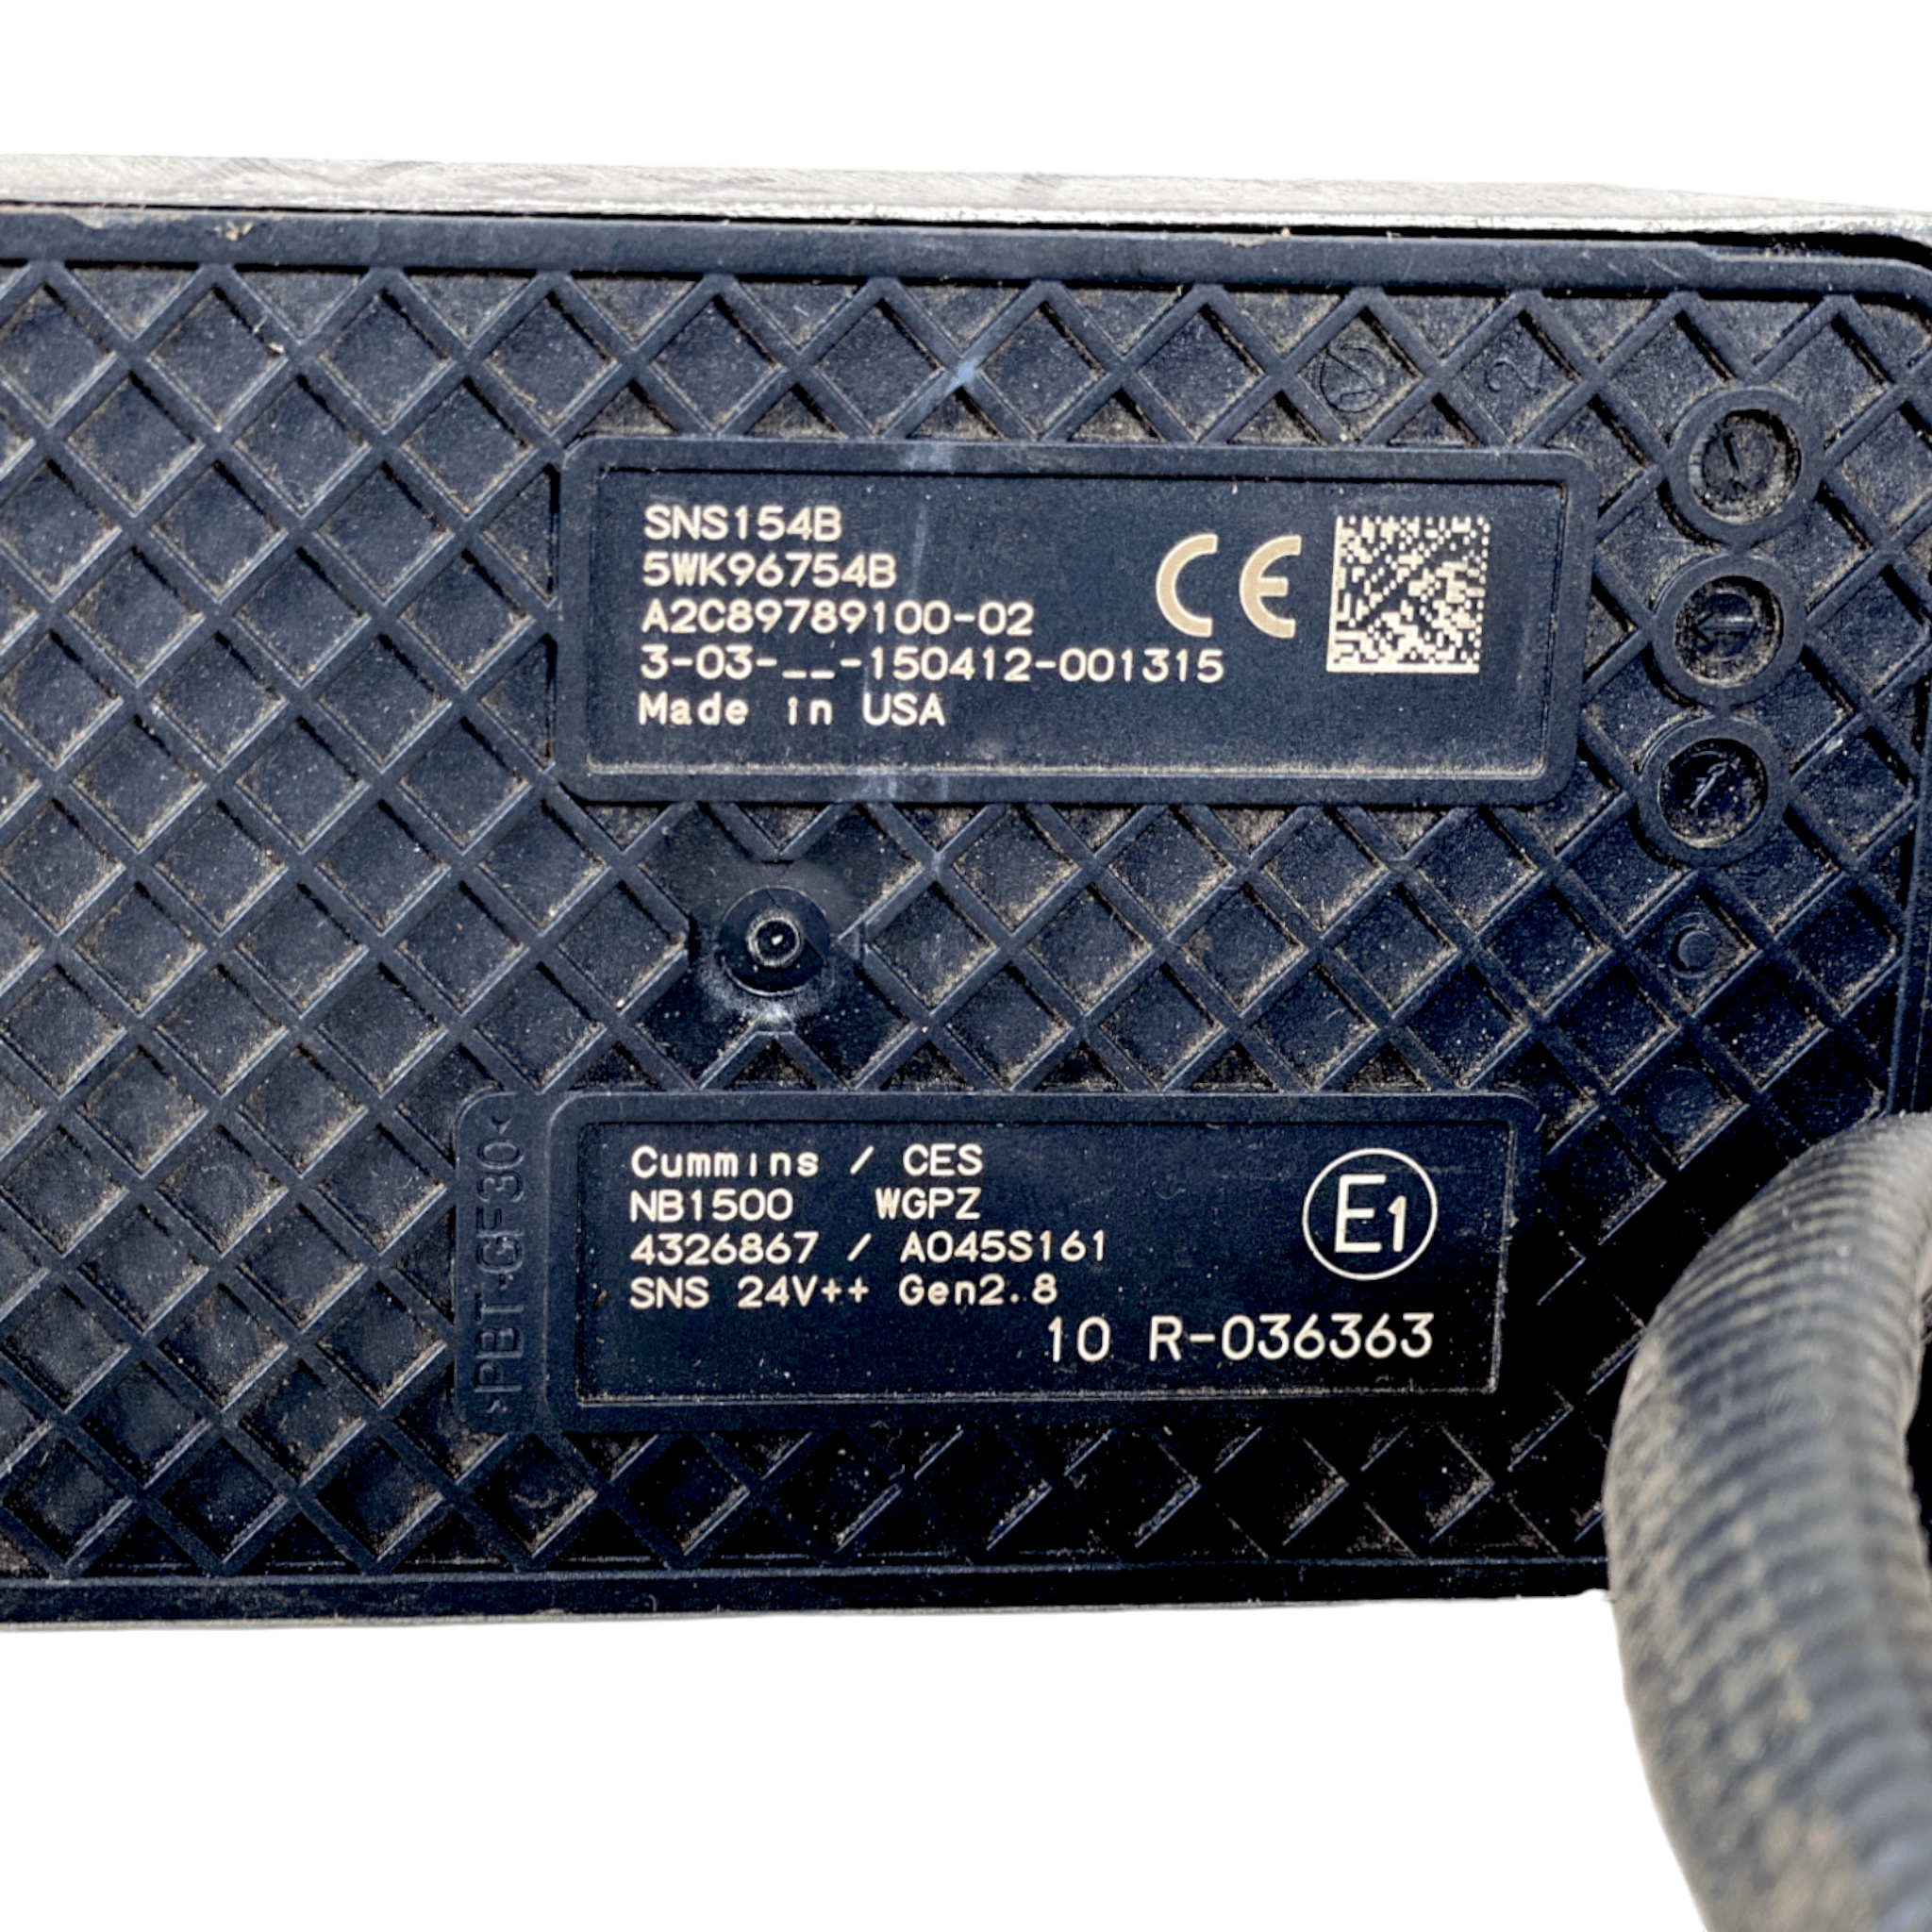 4326867RX Genuine Cummins Nitrogen Oxide Nox Sensor For Epa13 8.9 Isc/Isl - ADVANCED TRUCK PARTS